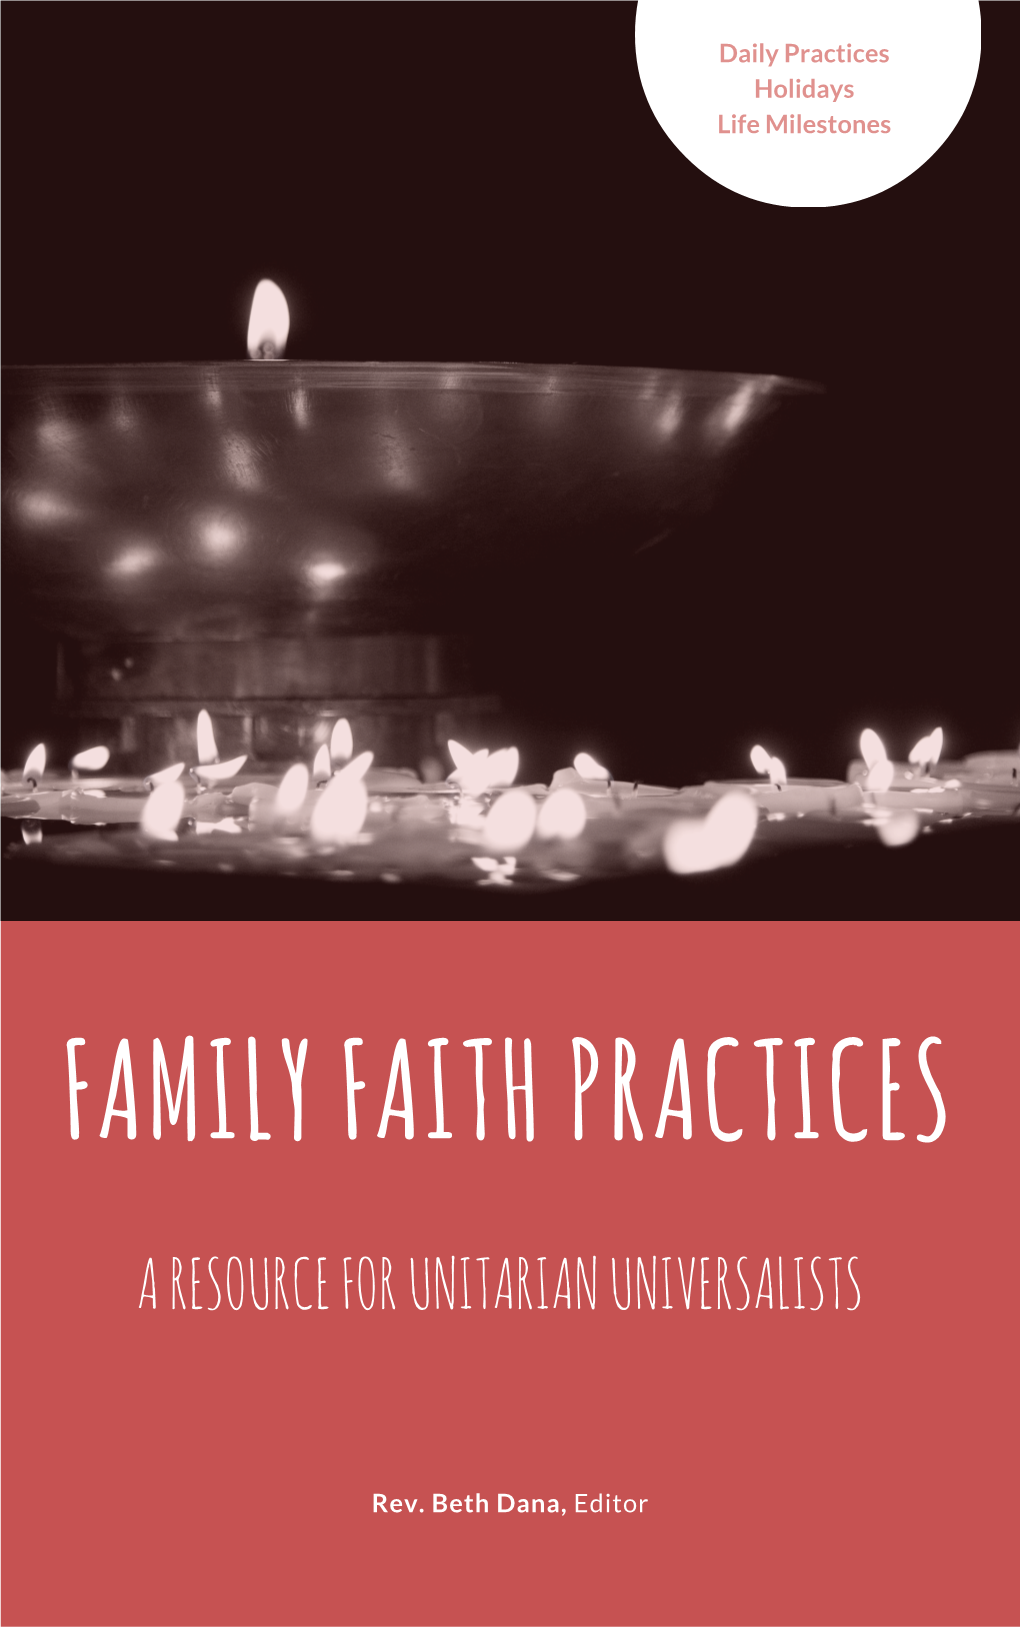 Family Faith Practices Booklet